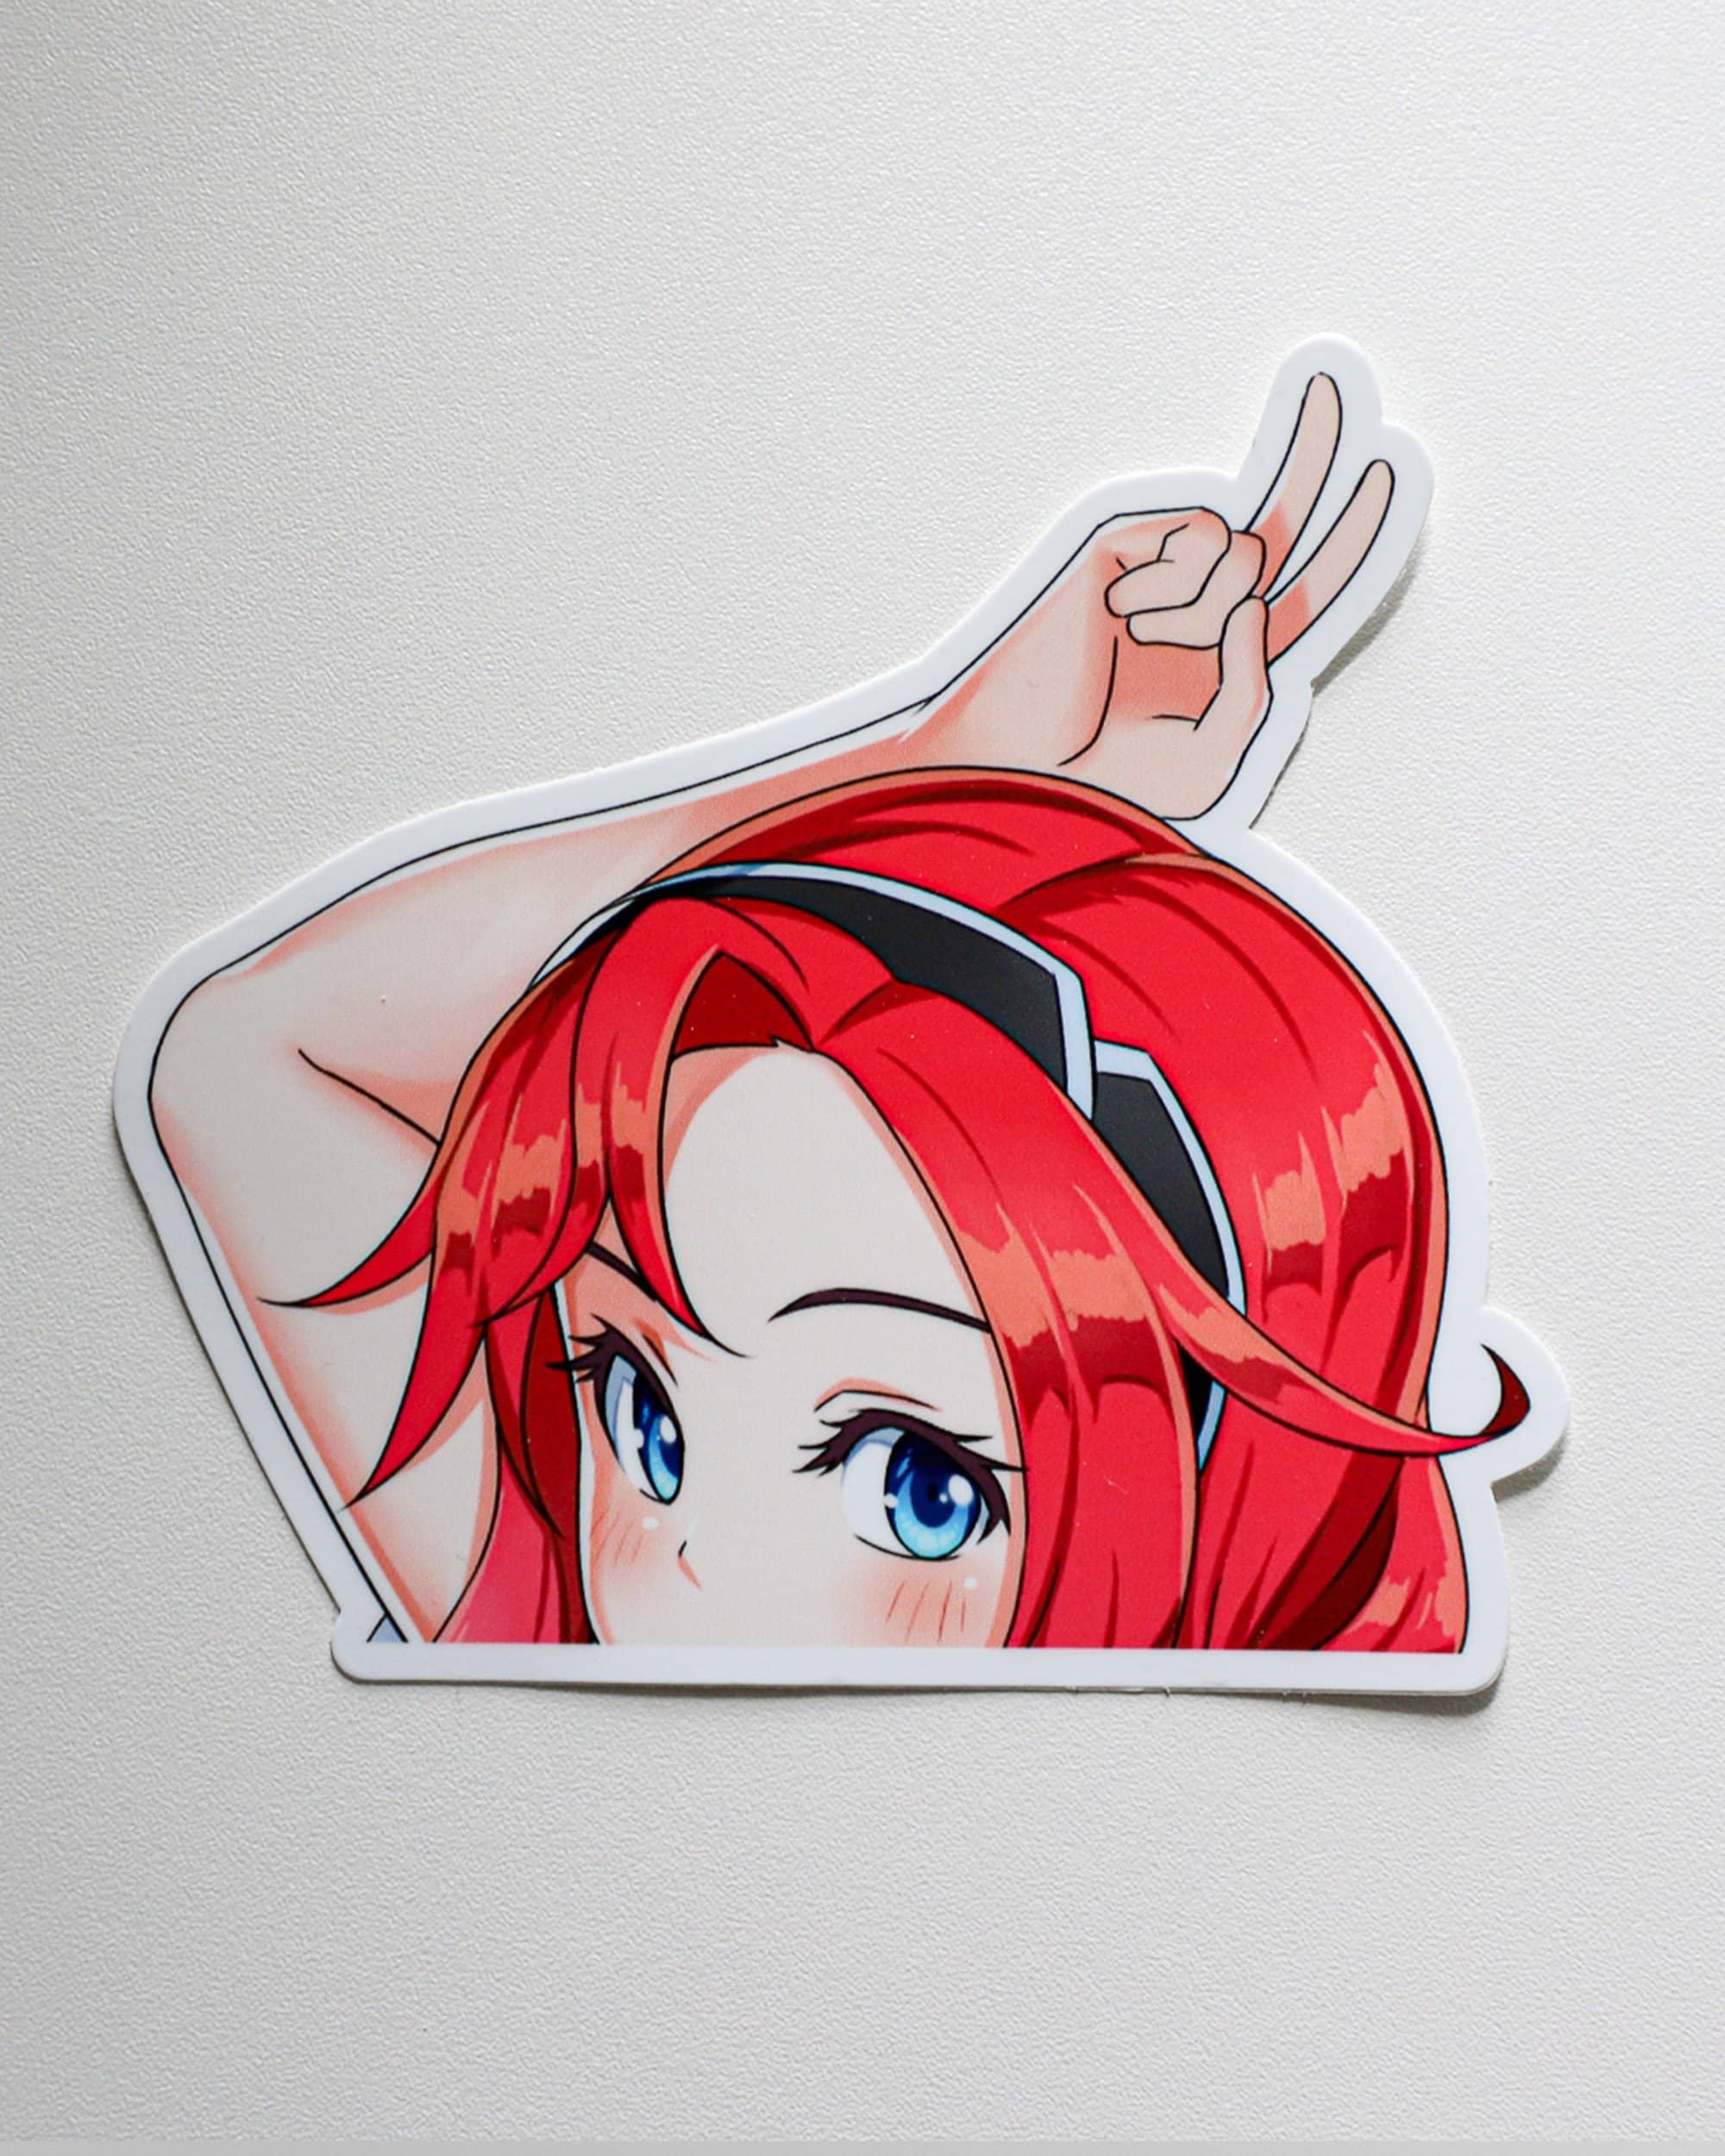 Menhera-chan peeker - Peeking anime girl | Sticker